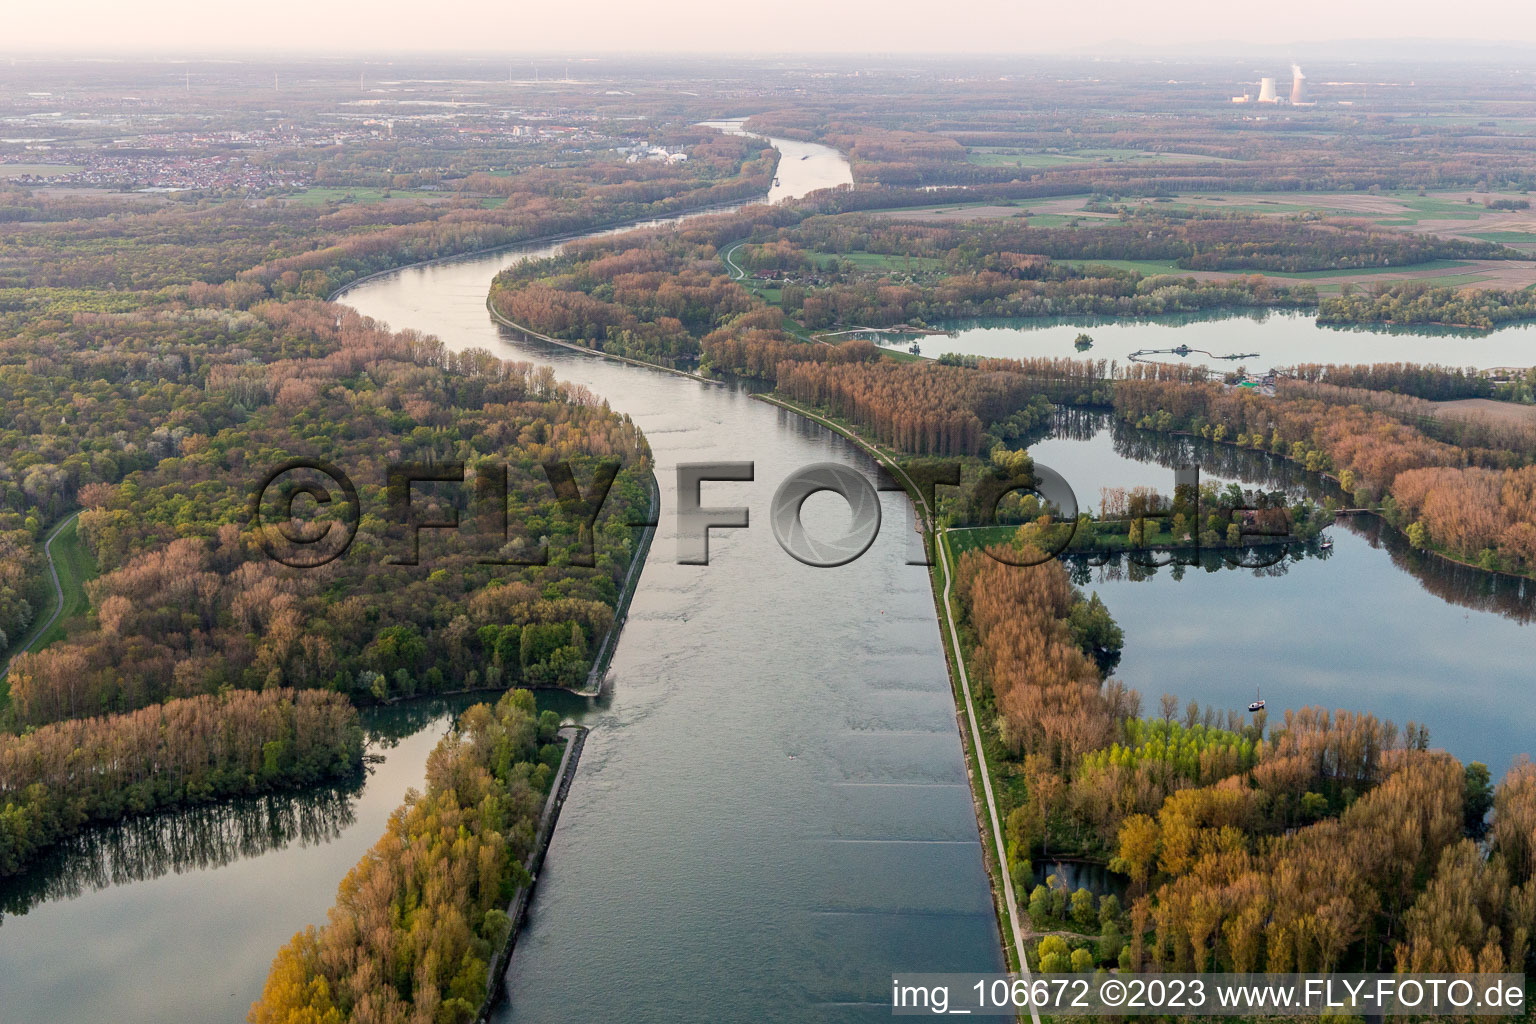 Aerial view of Rhine in Leimersheim in the state Rhineland-Palatinate, Germany